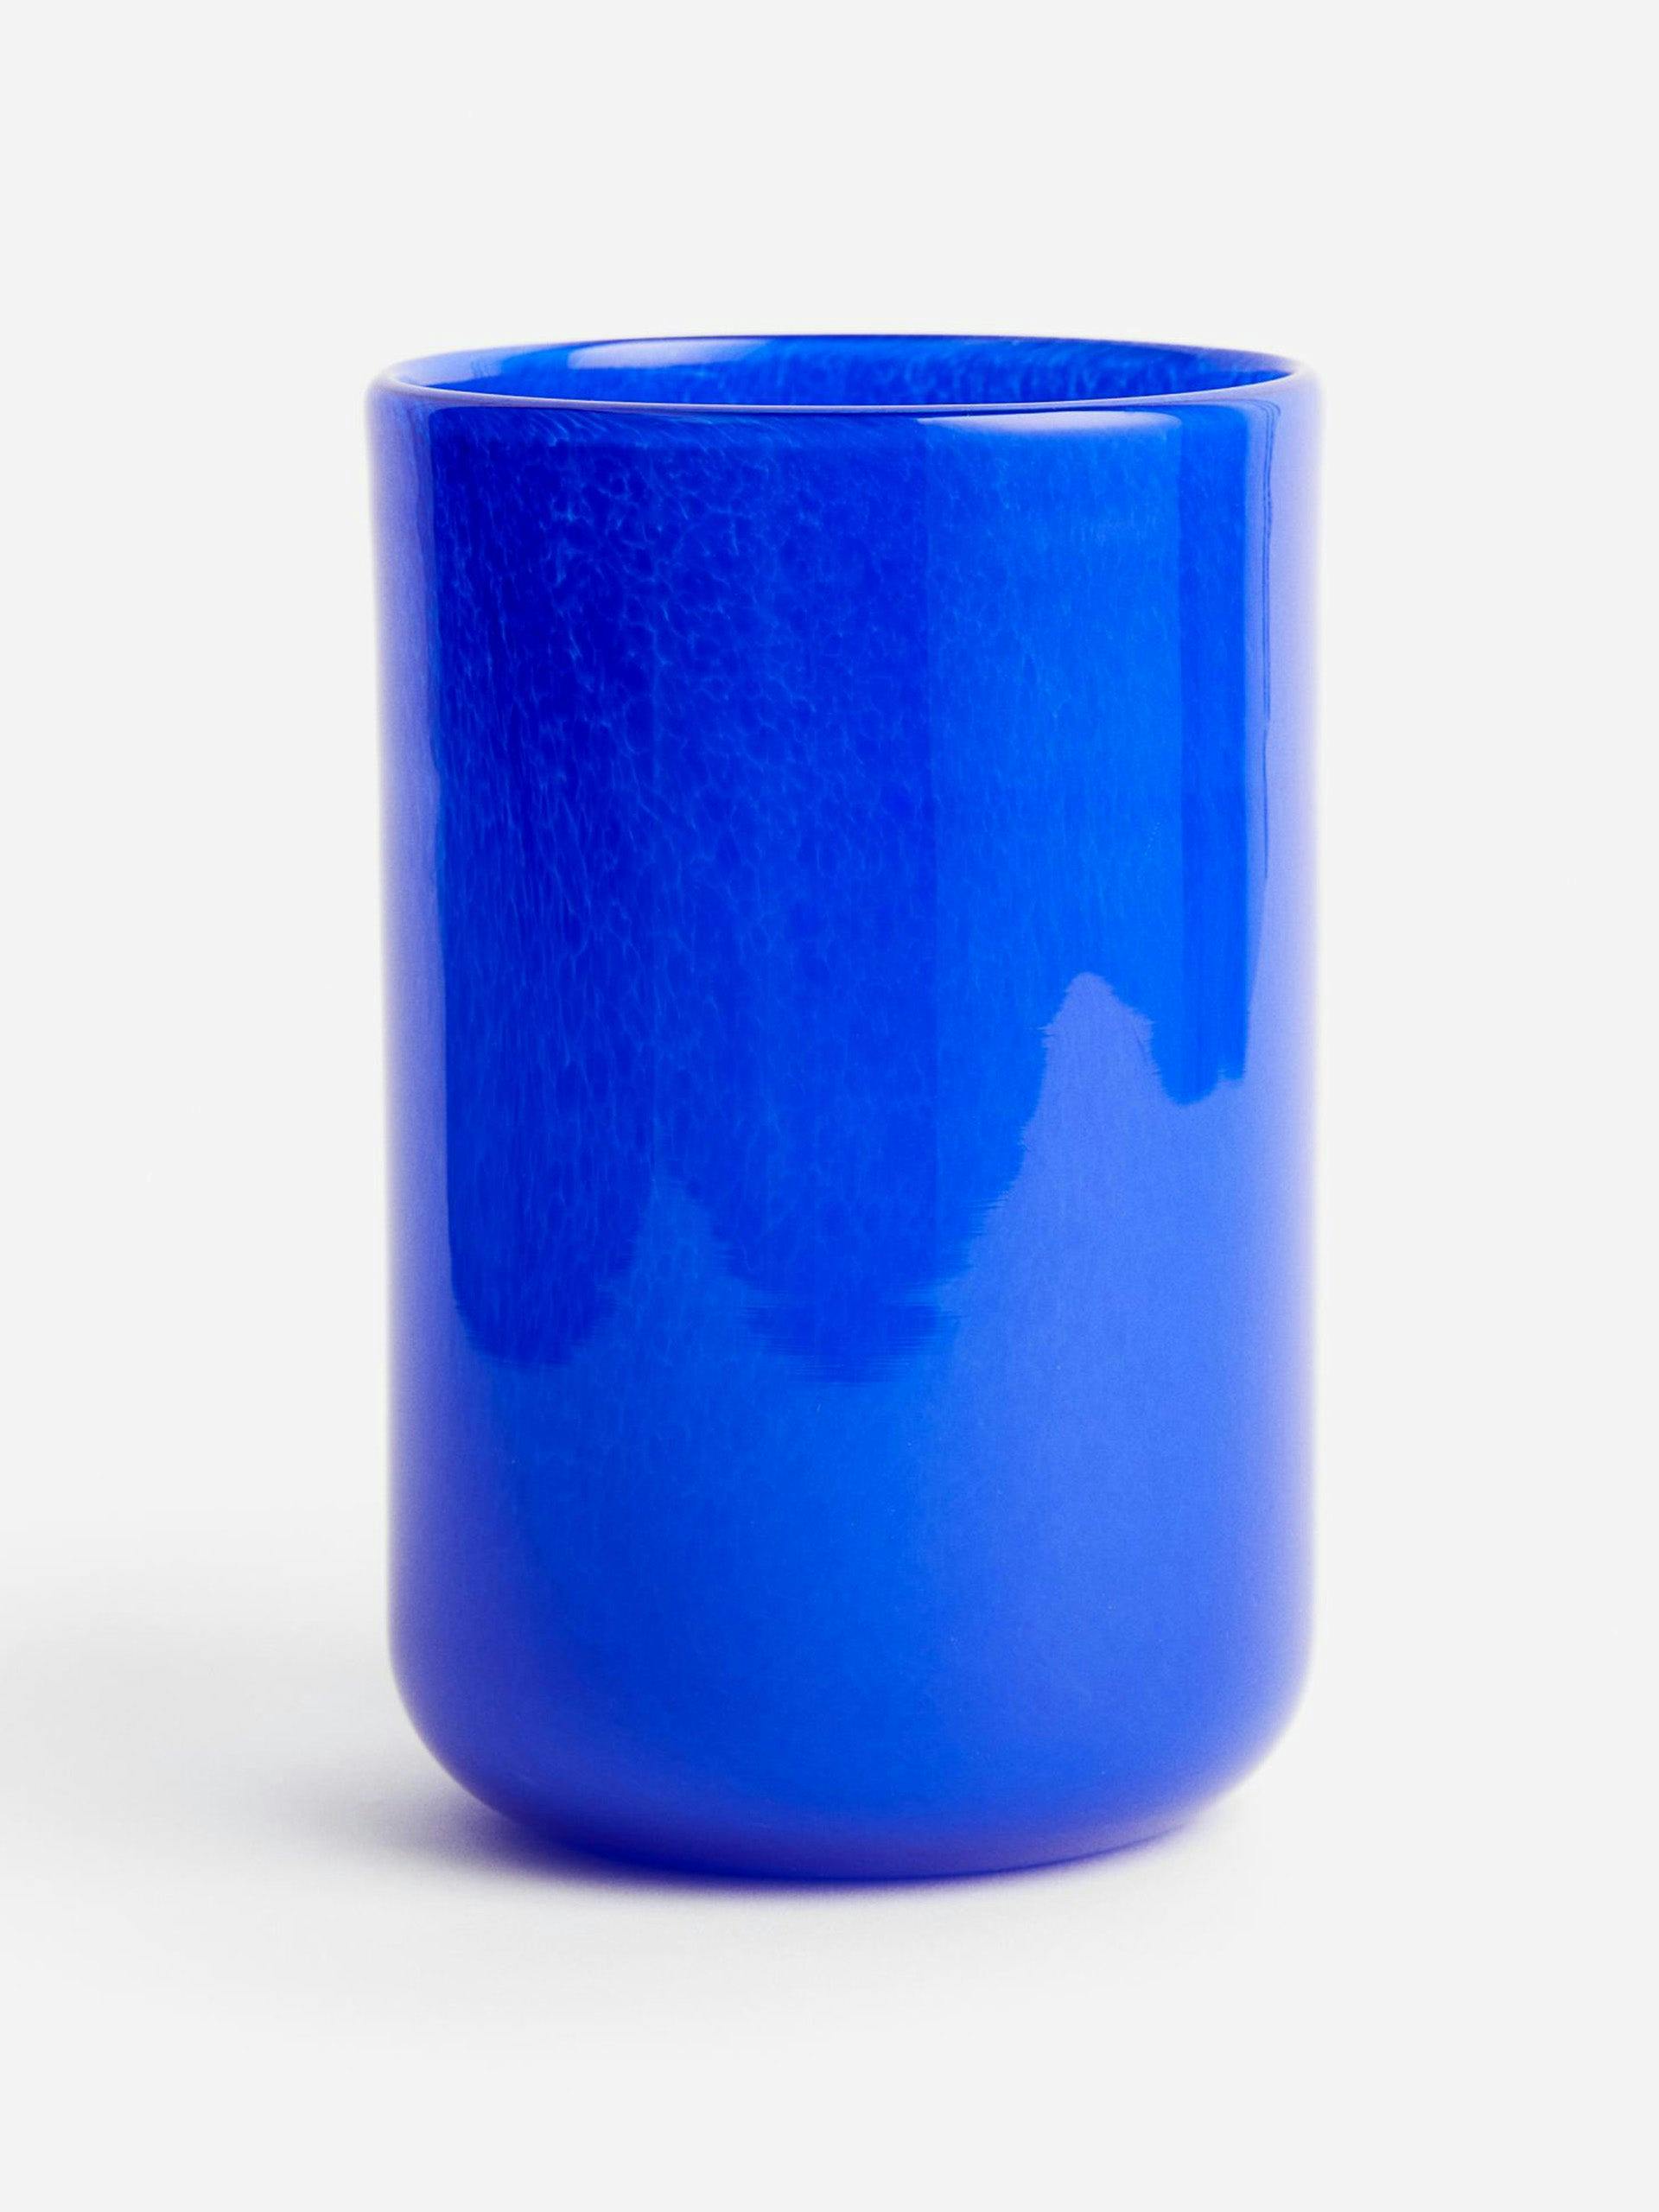 Bright blue vase